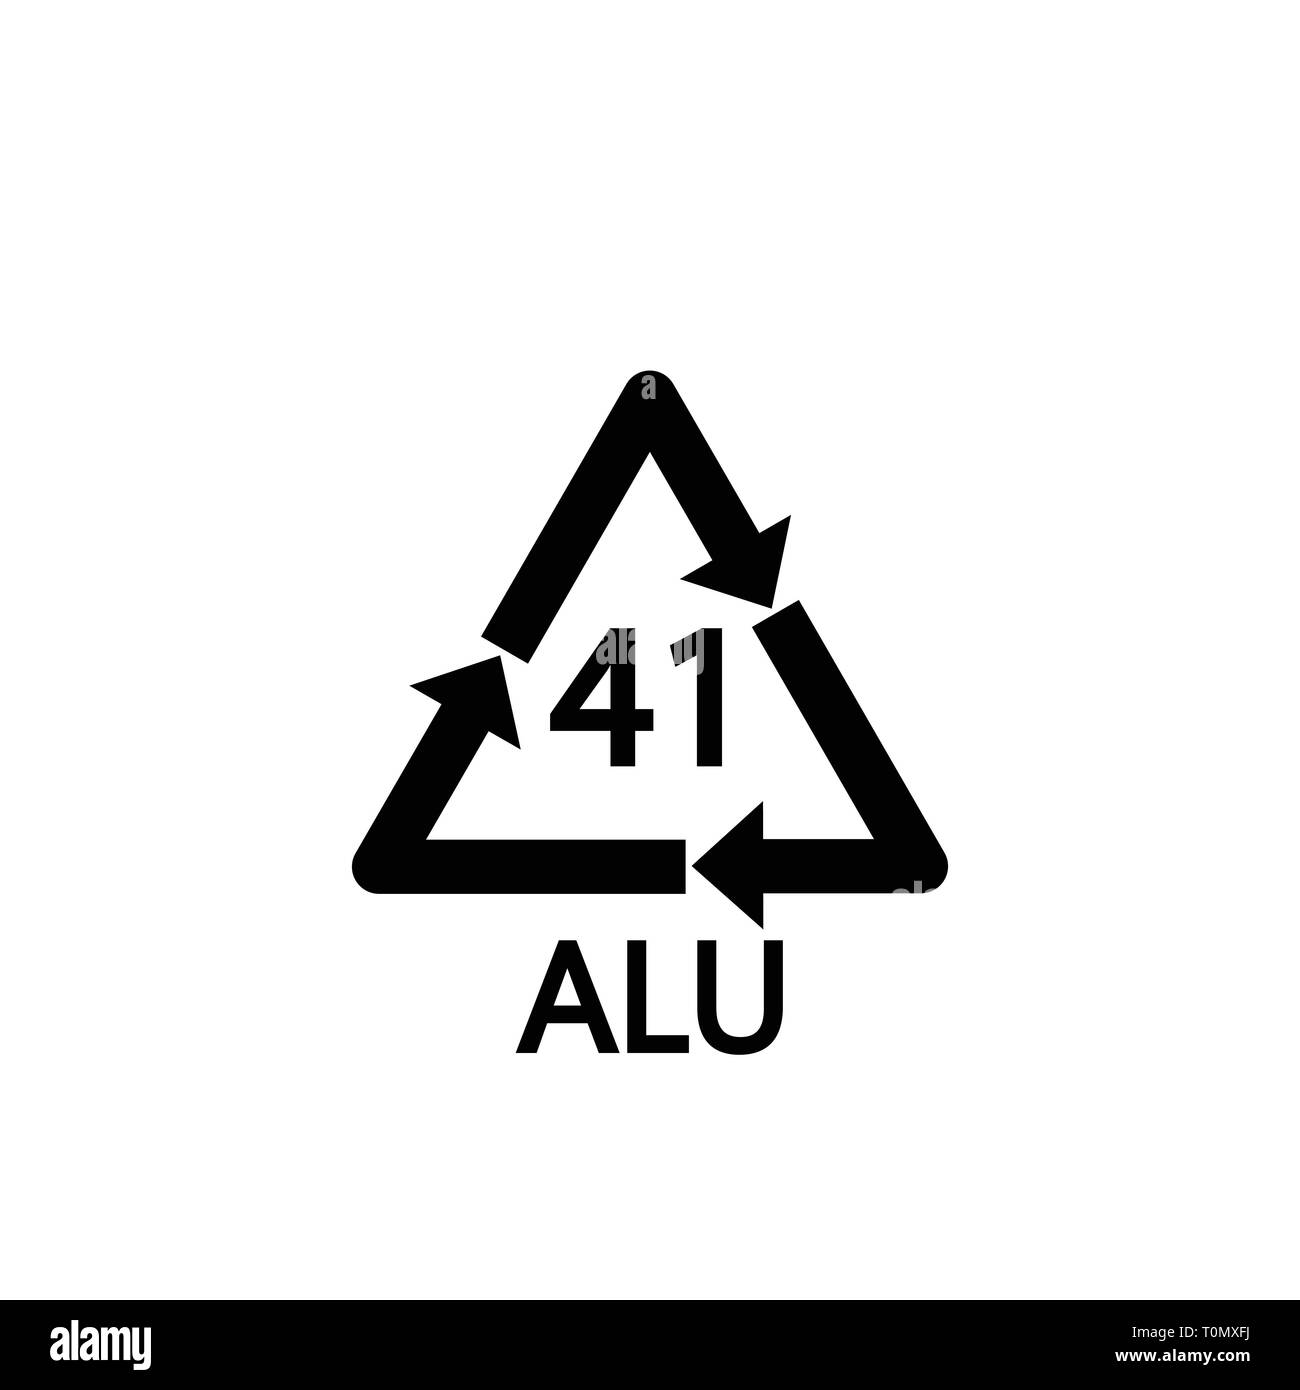 Symbole de recyclage de l'aluminium ALU 41 . Vector Illustration de Vecteur